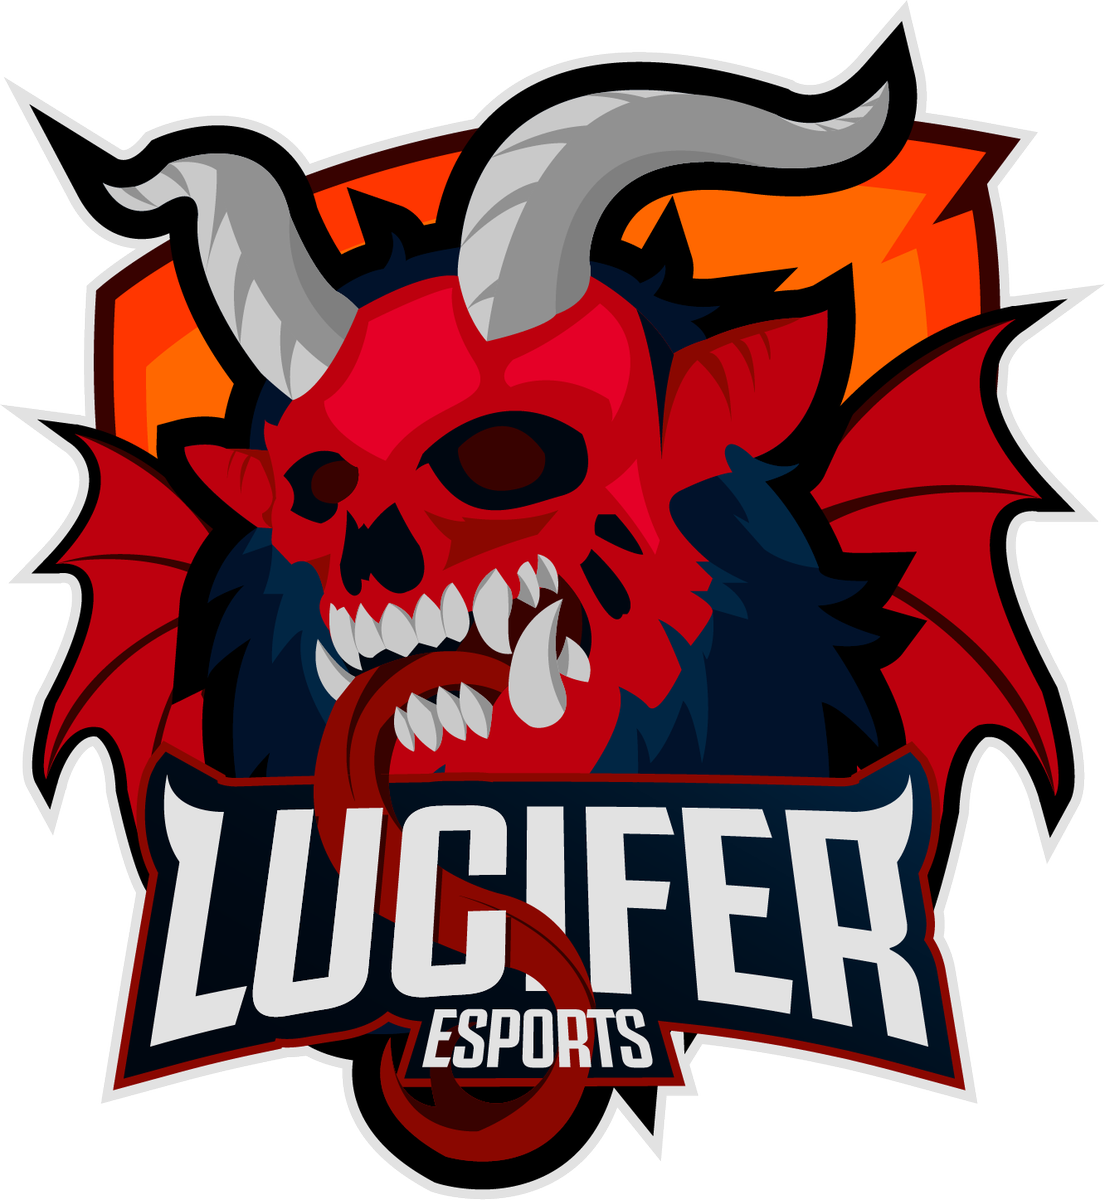 Lucifer Esports On Twitter - Lucifer Esports (1105x1200)